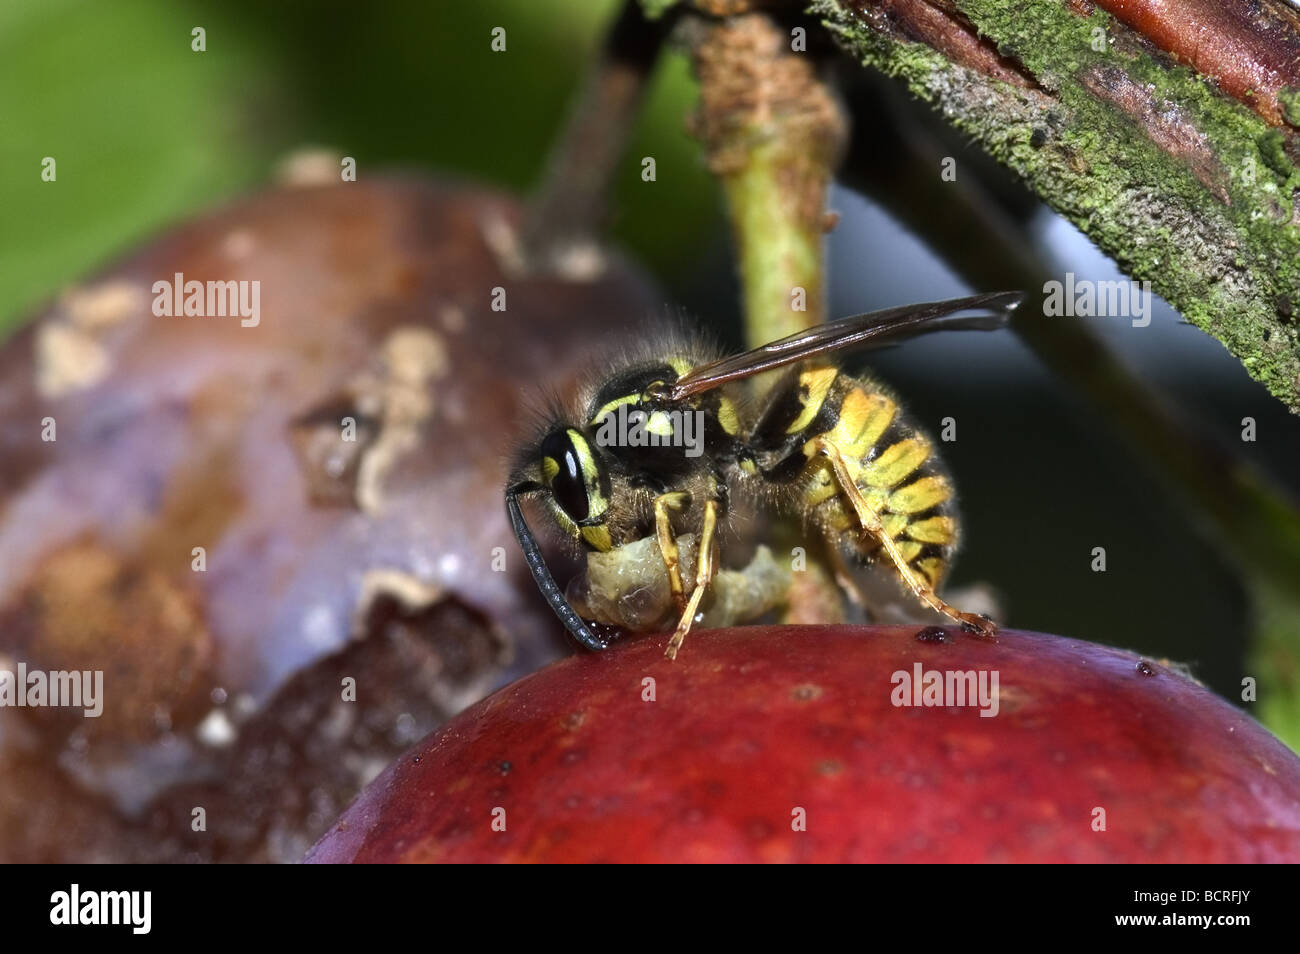 A wasp Vespula vulgaris feeding on a tortrix caterpillar Adoxophes orana on a ripe plum fruit on the tree Stock Photo